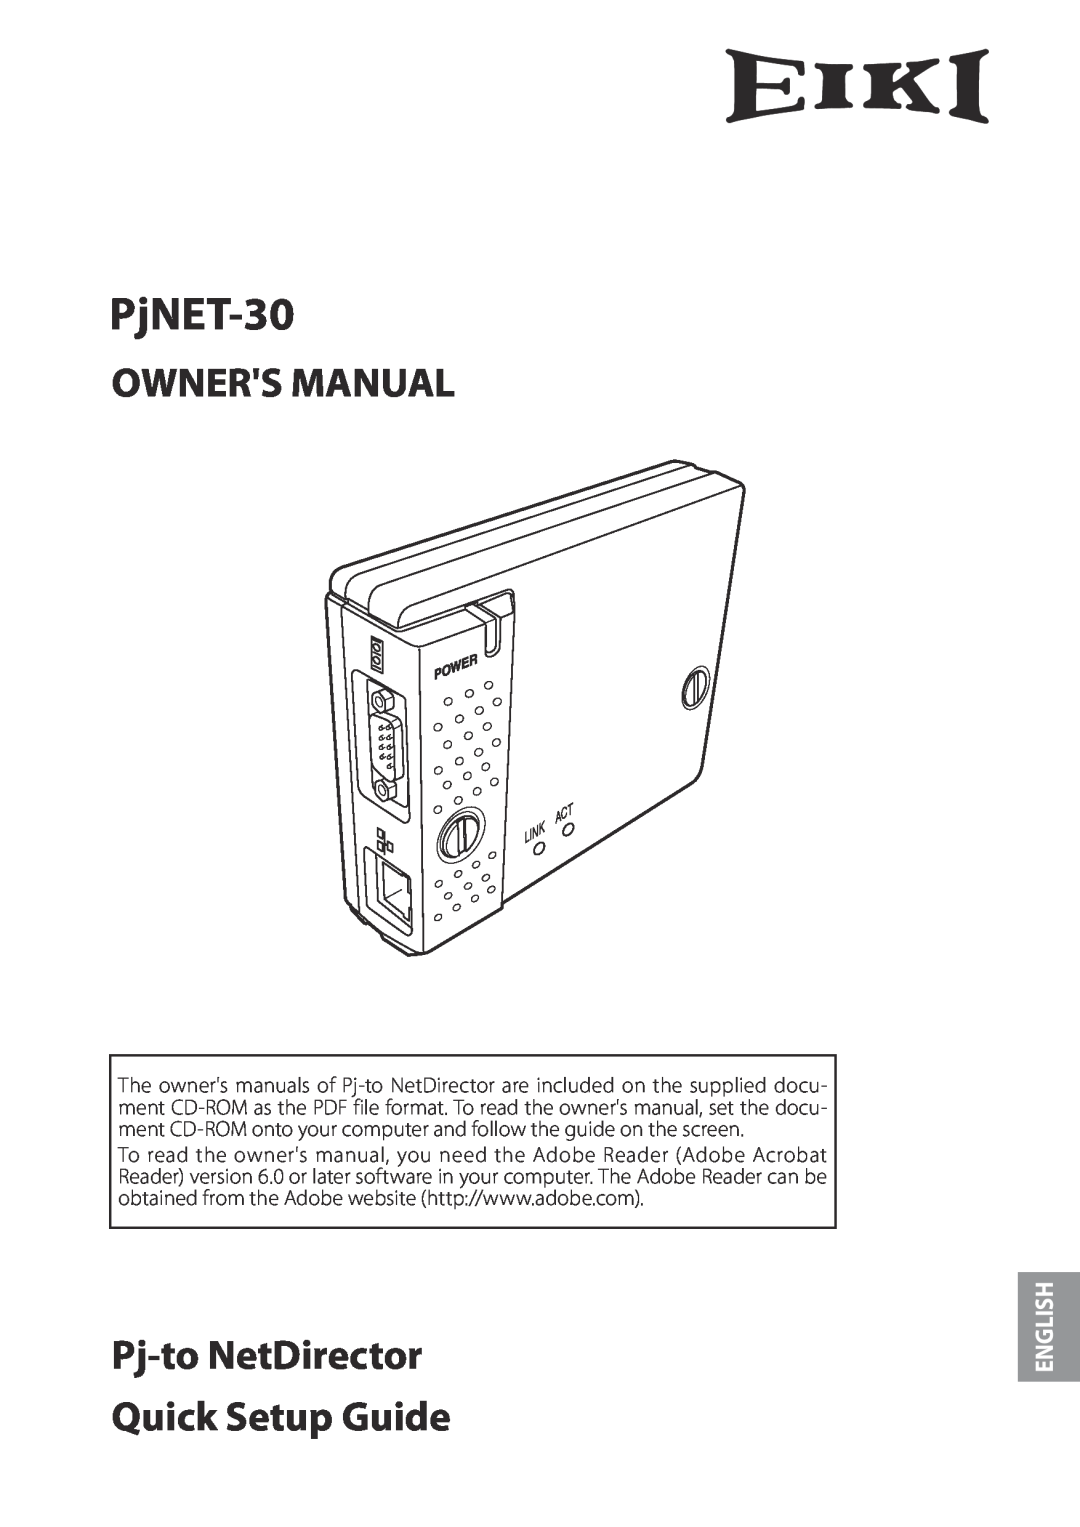 Eiki PJNET-30 setup guide PjNET-30, Pj-to NetDirector, Quick Setup Guide, English, Act Link 